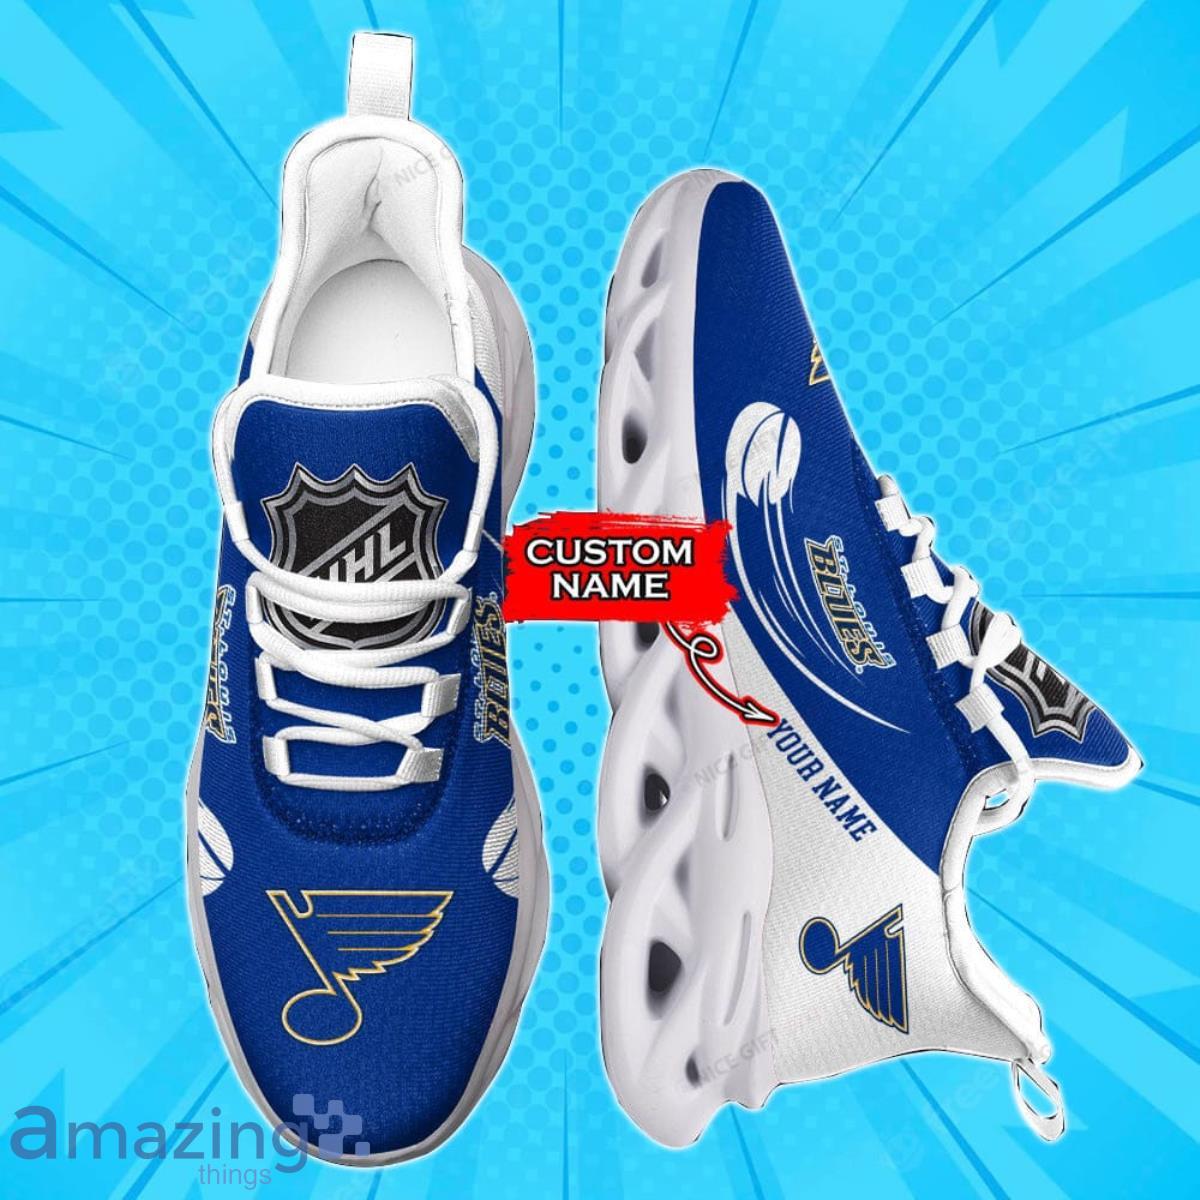 St. Louis Blues Custom Name Air Jordan 4 Shoes Impressive Gift For